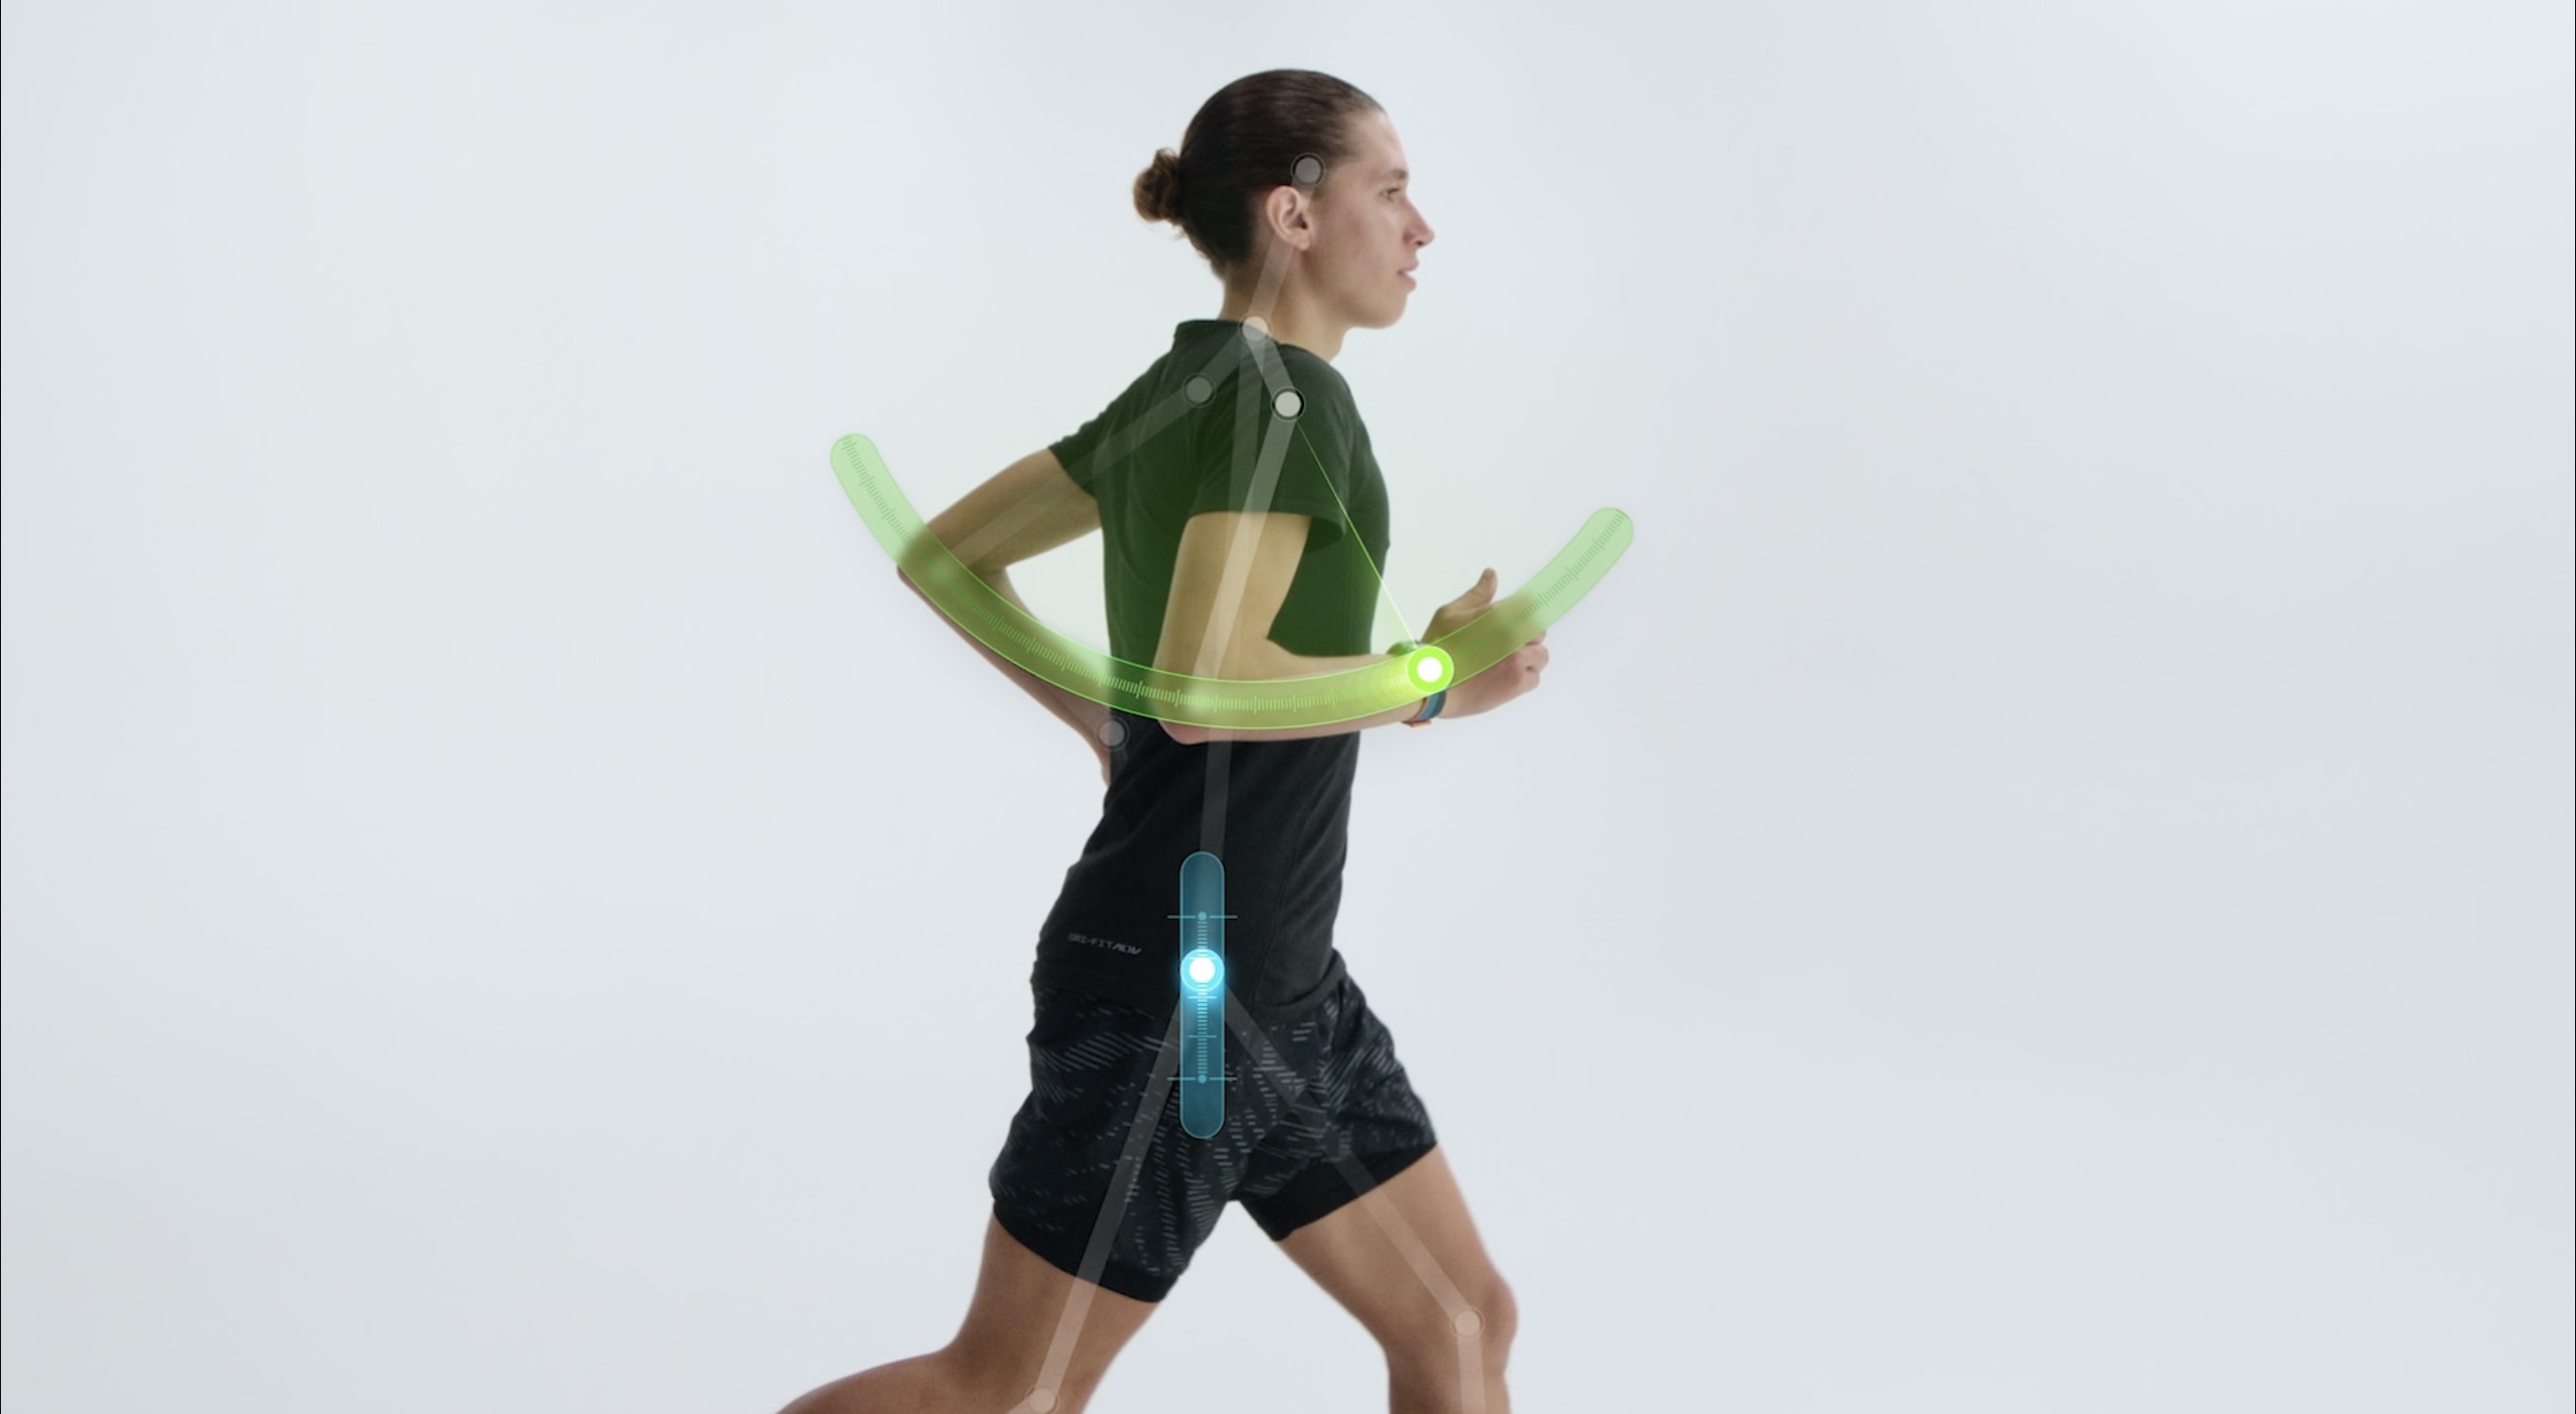 Running Form Metrics could make you a better runner